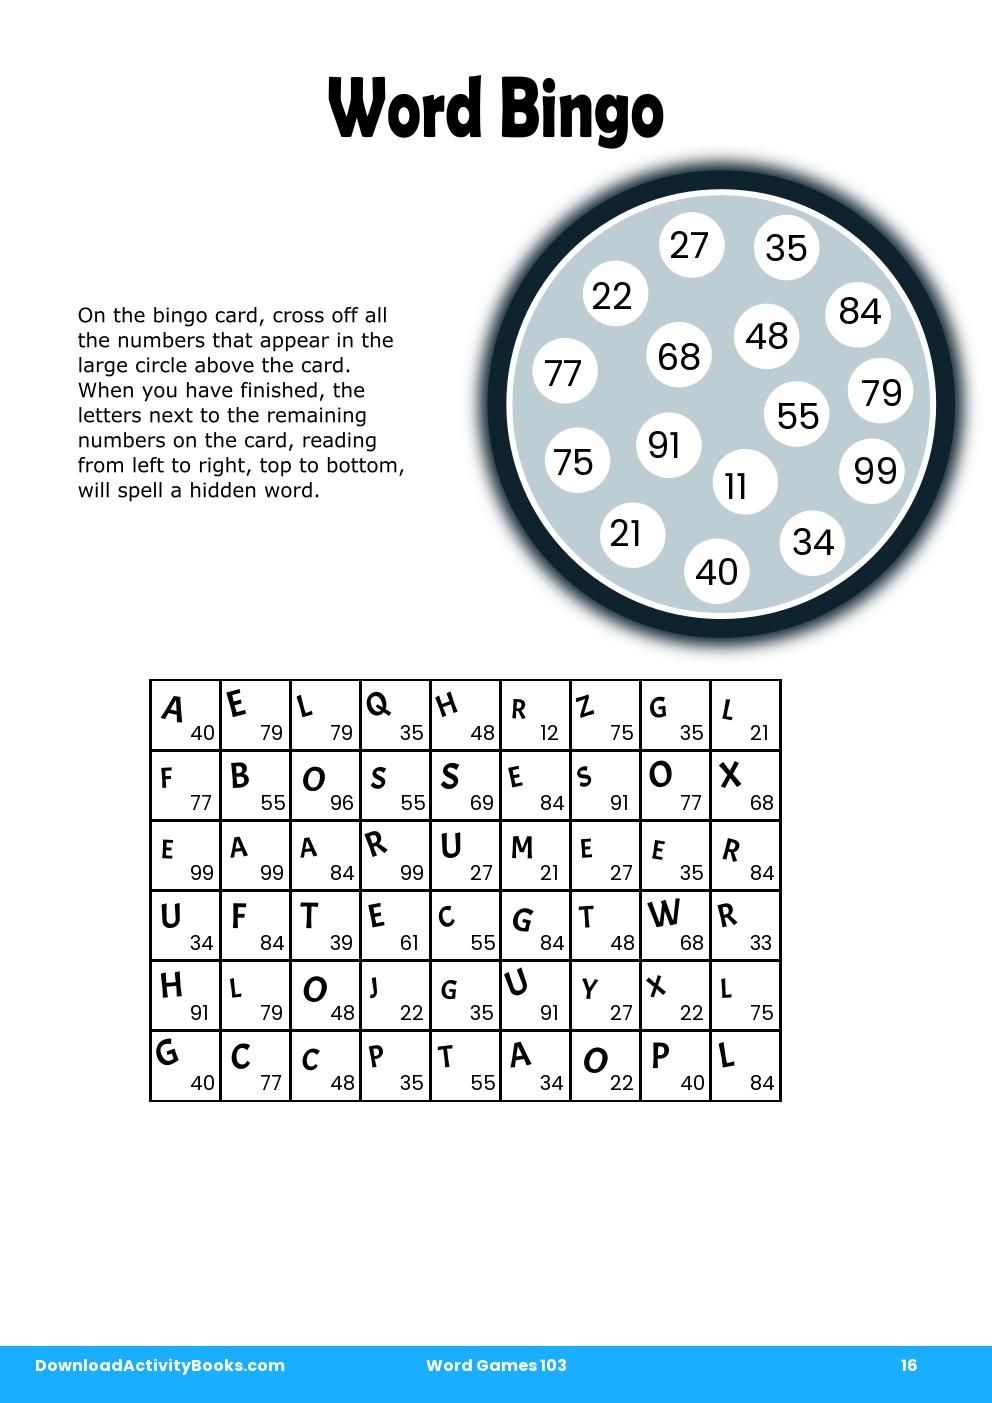 Word Bingo in Word Games 103